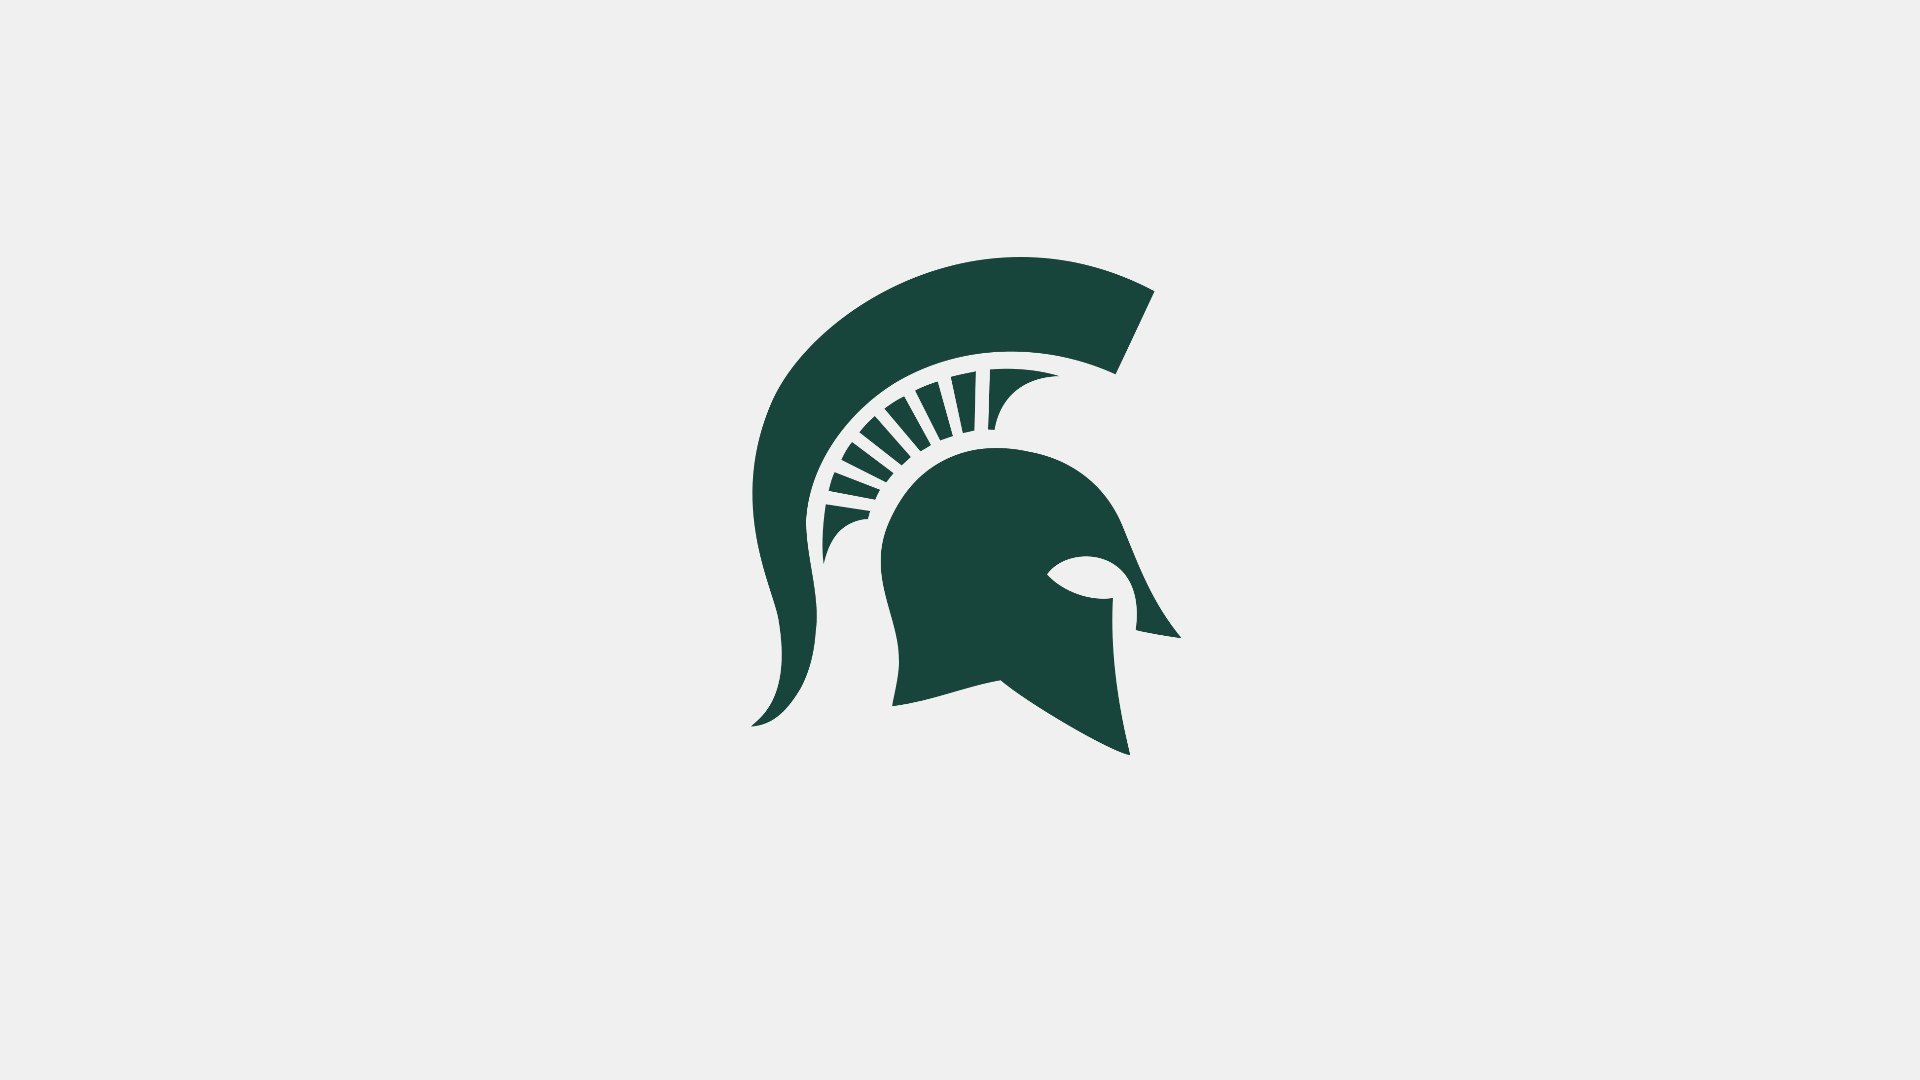 1920x1080 Download Fullsize Image Â· Michigan-State-Spartans-Logo-Wallpaper-